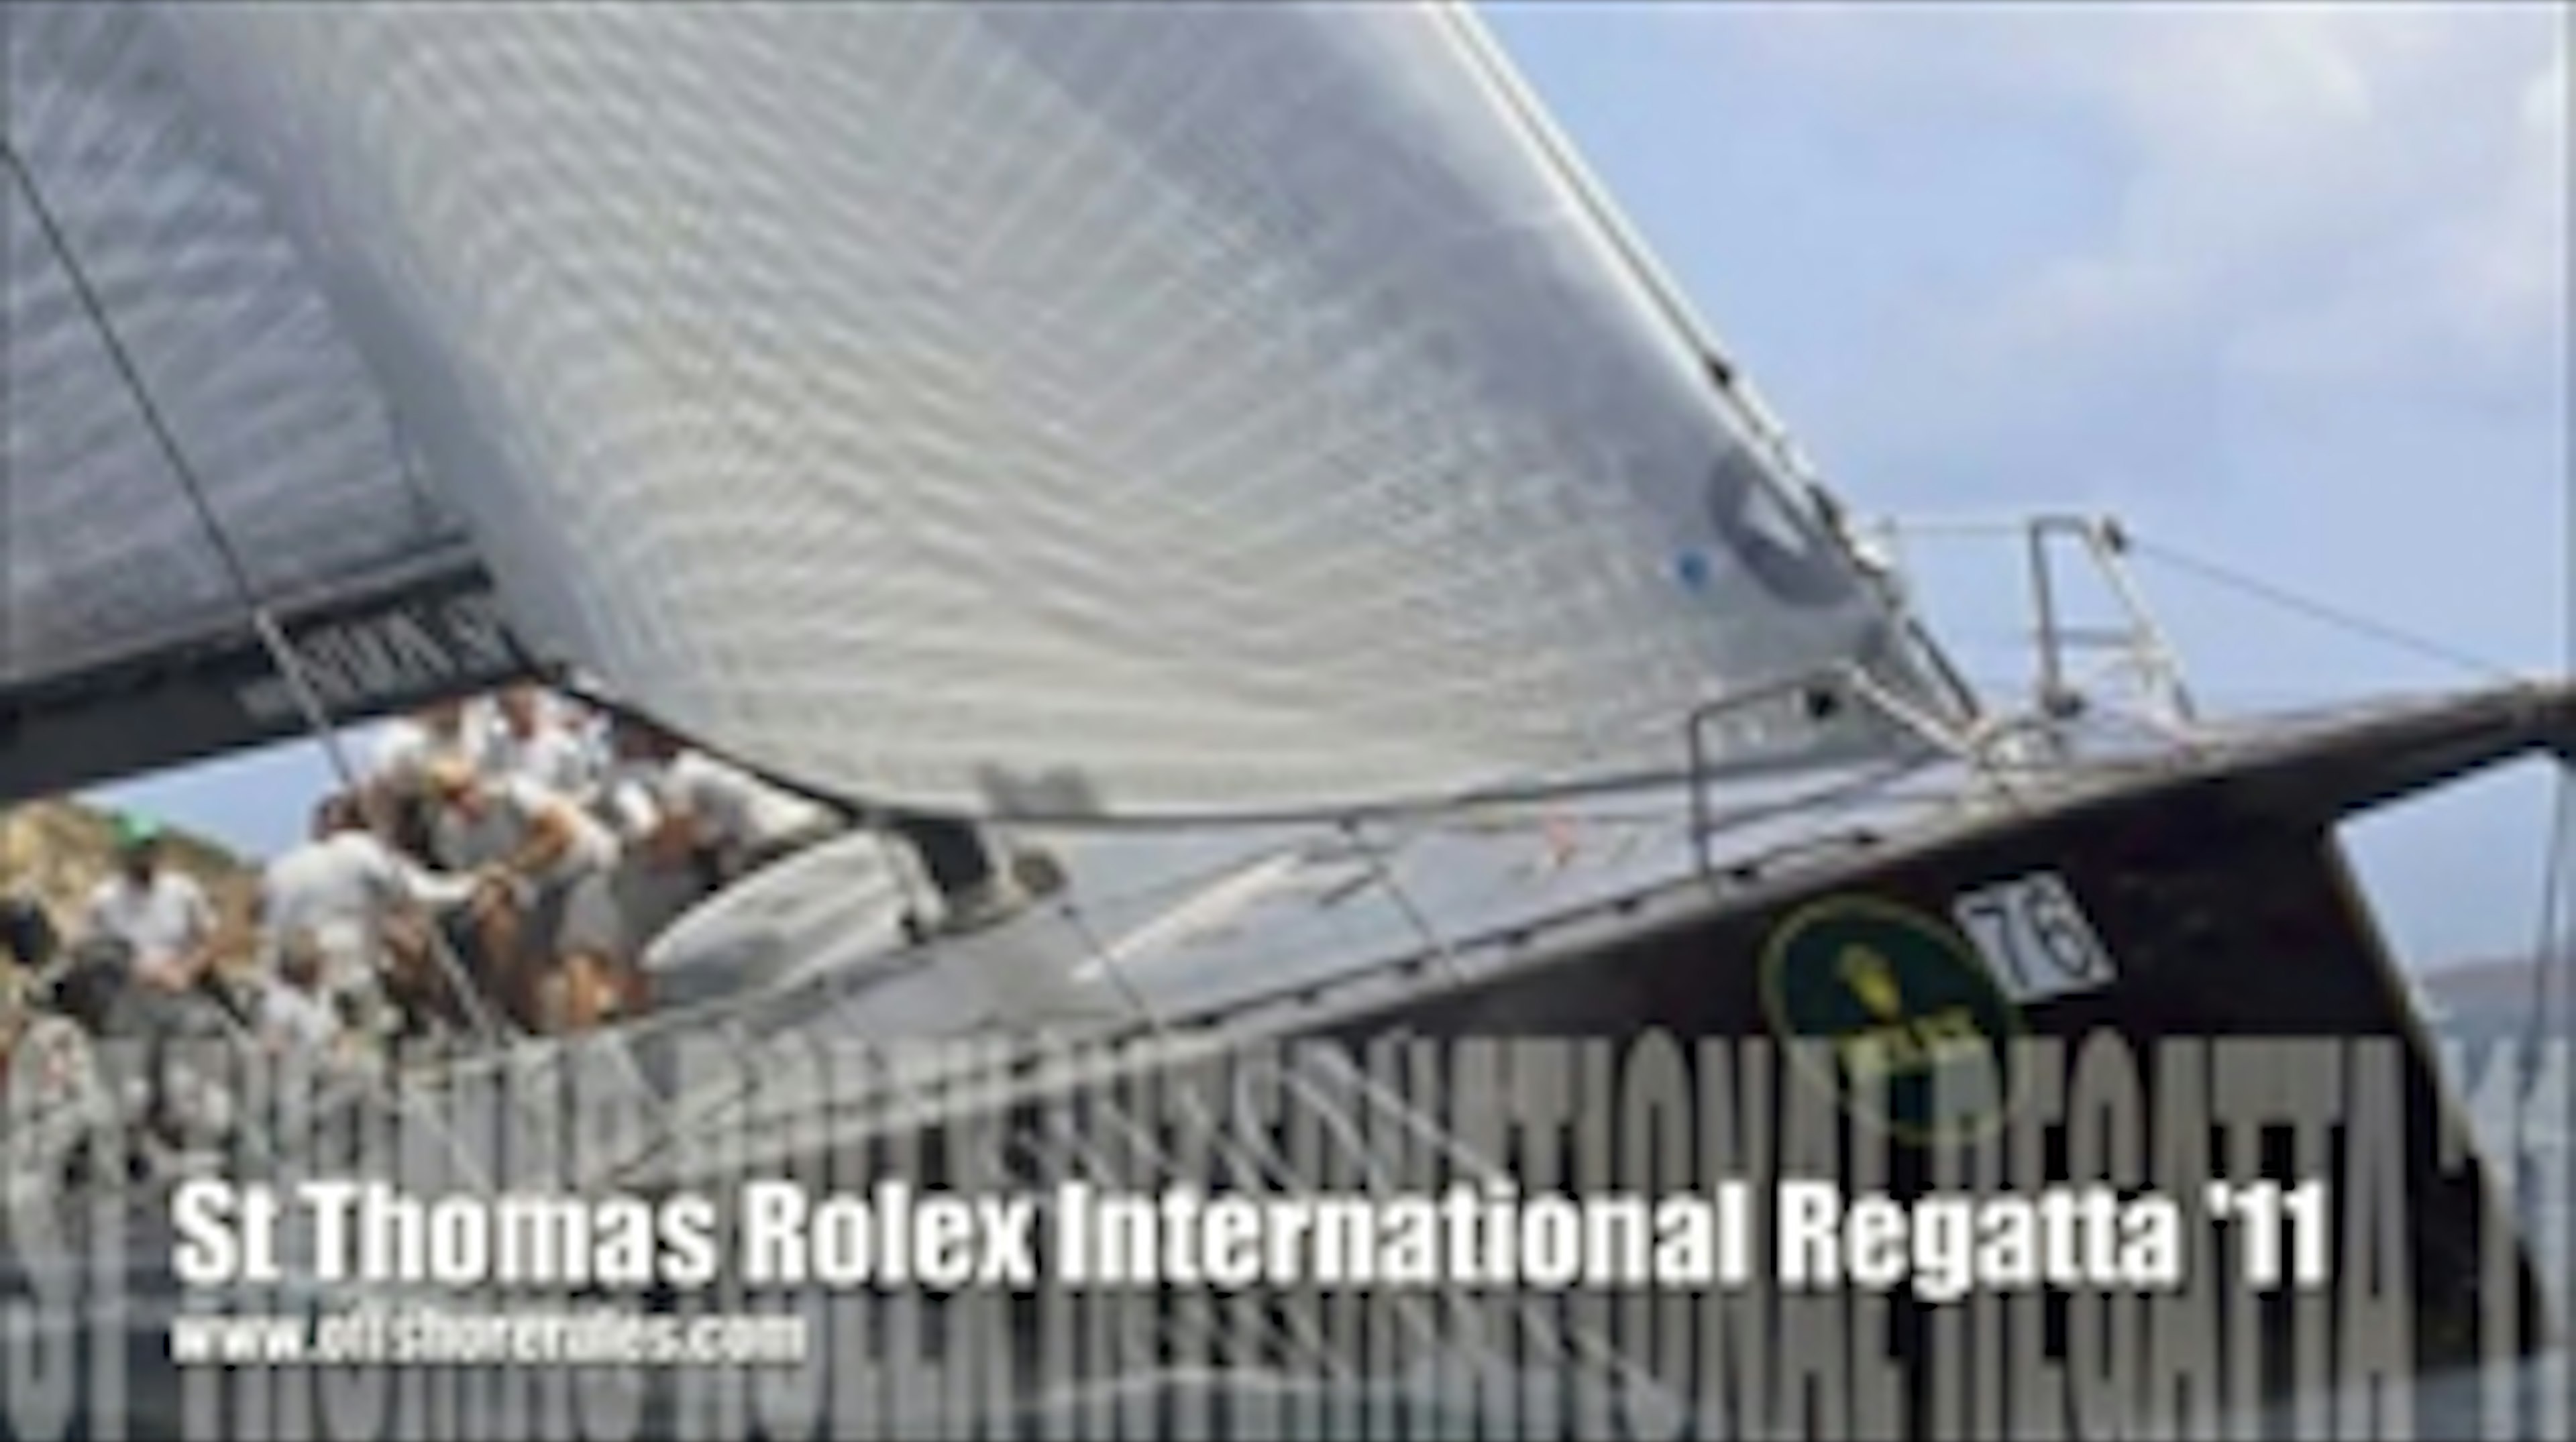 Genuine Risk i St Thomas Rolex international